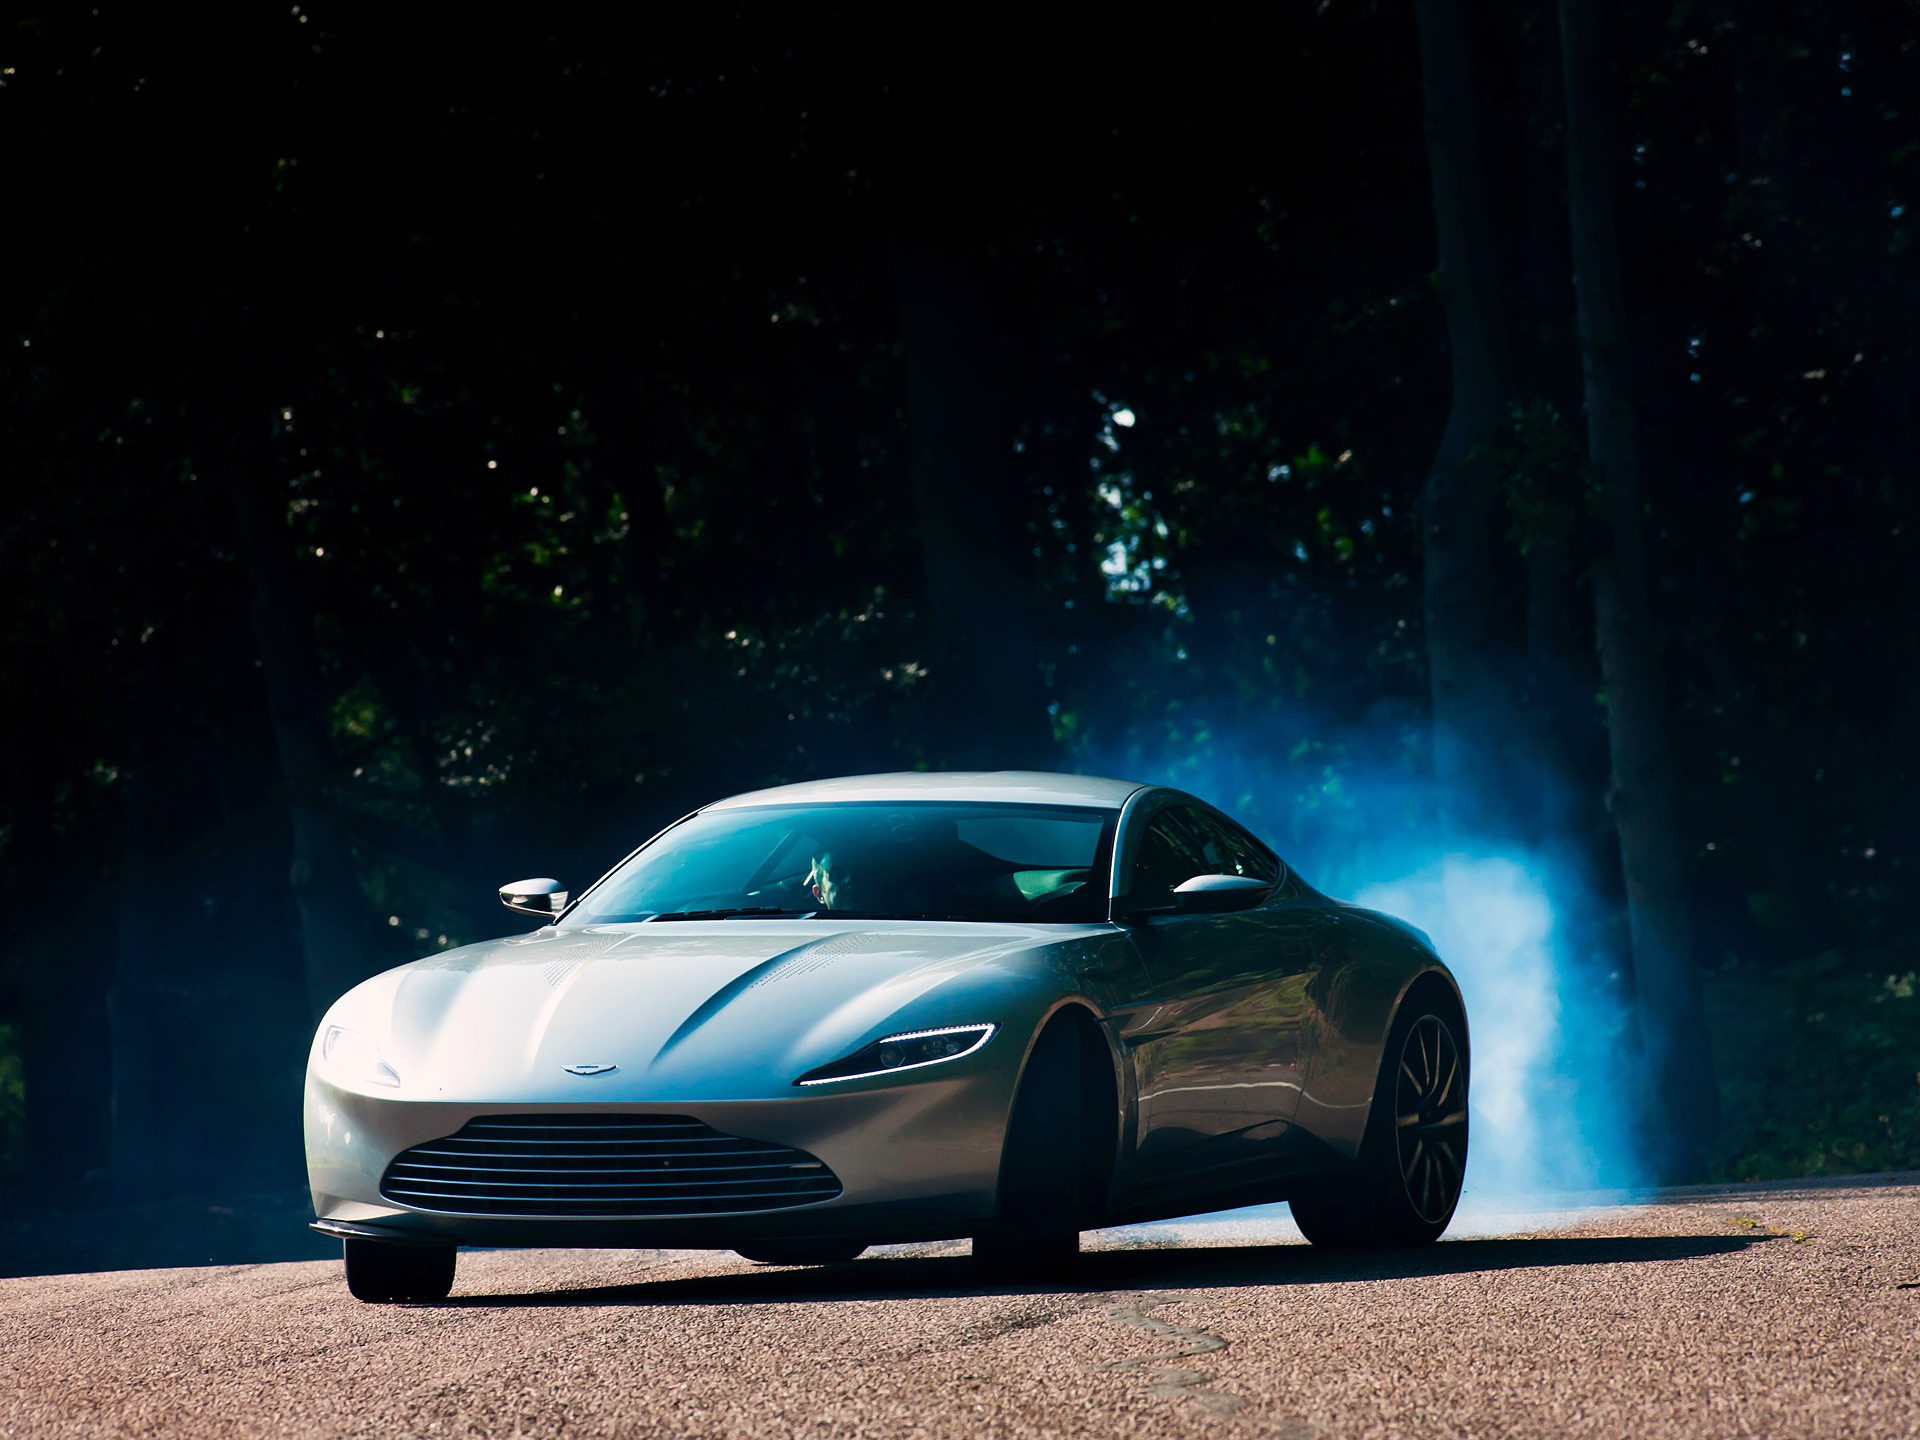  2015 Aston Martin DB10 Spectre Wallpaper.